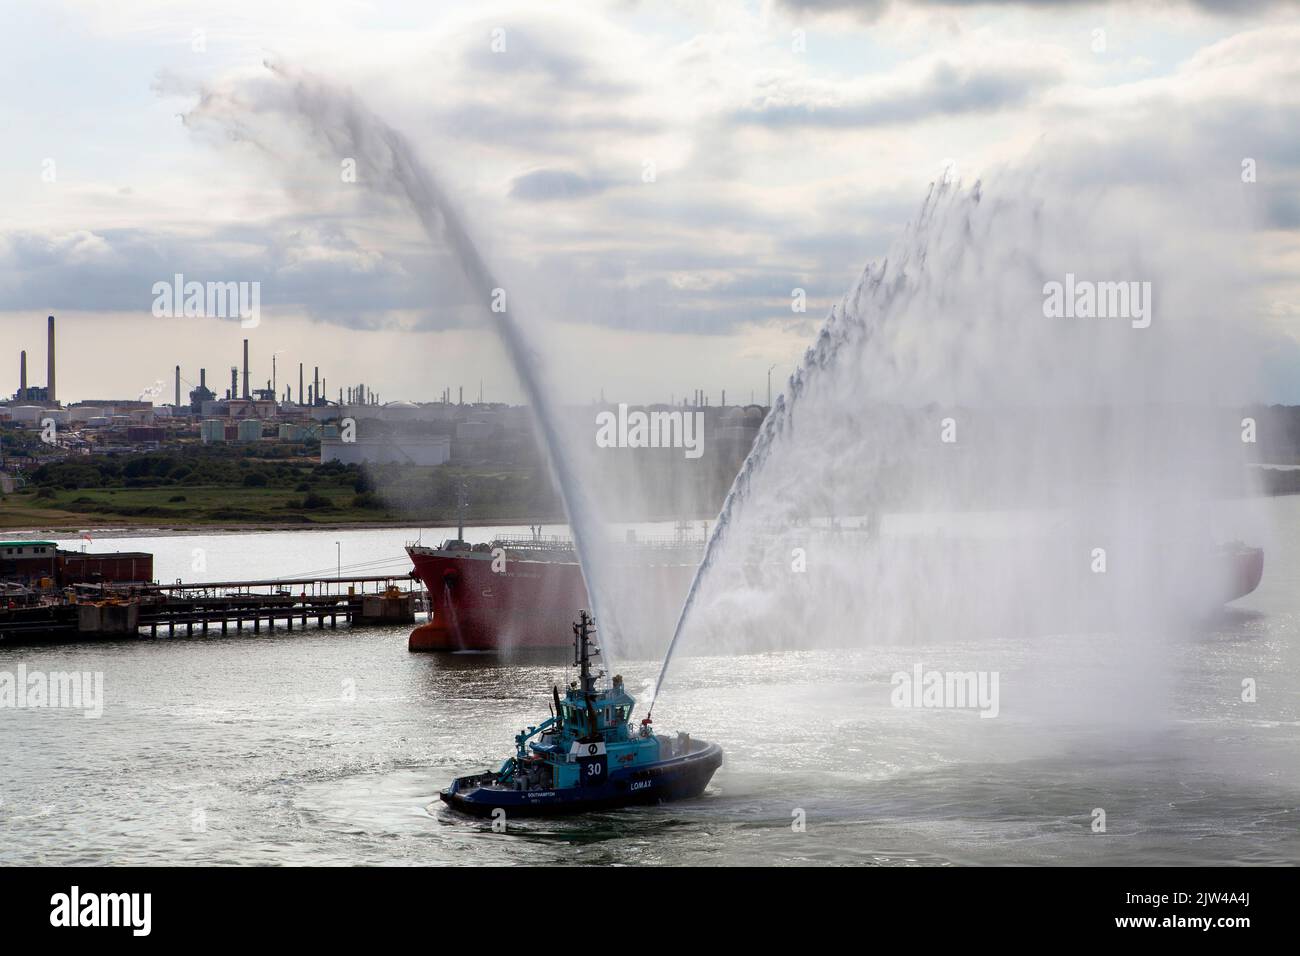 Lomax Fire Fighting Vessel tug water saluting cruise ship Stock Photo